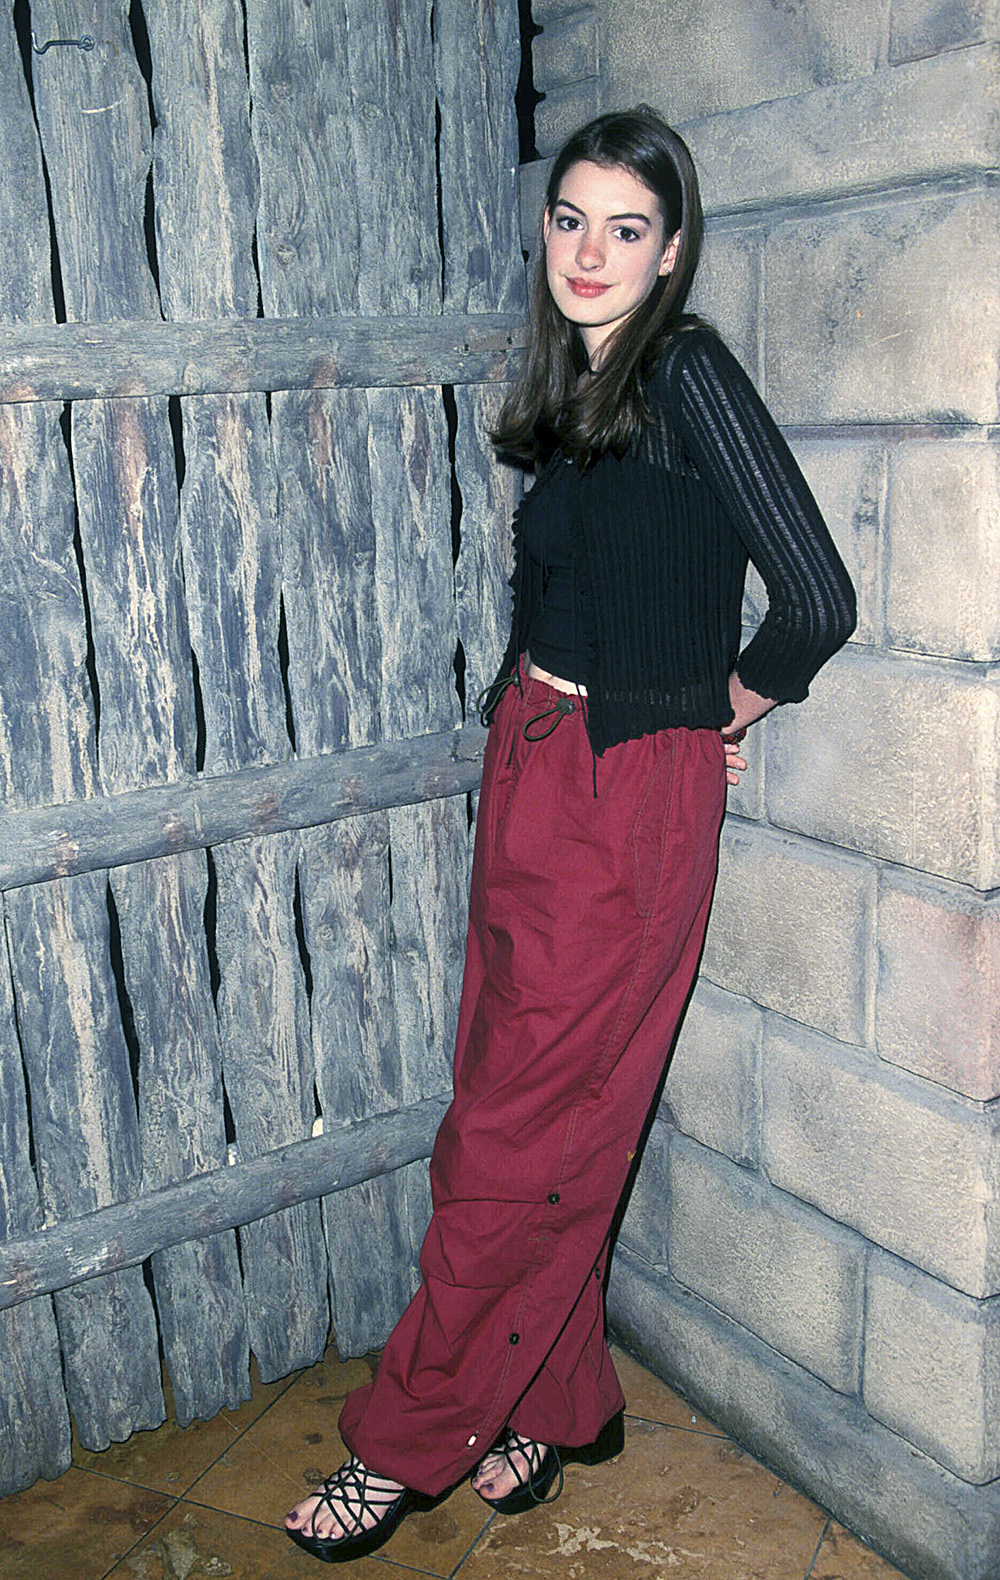 Anne Hathaway beim Fox Teen Press Junket Planet Hollywood in Los Angeles, CA 23.07.1999. Globe Credit: 3553583Photos/MediaPunch /IPX